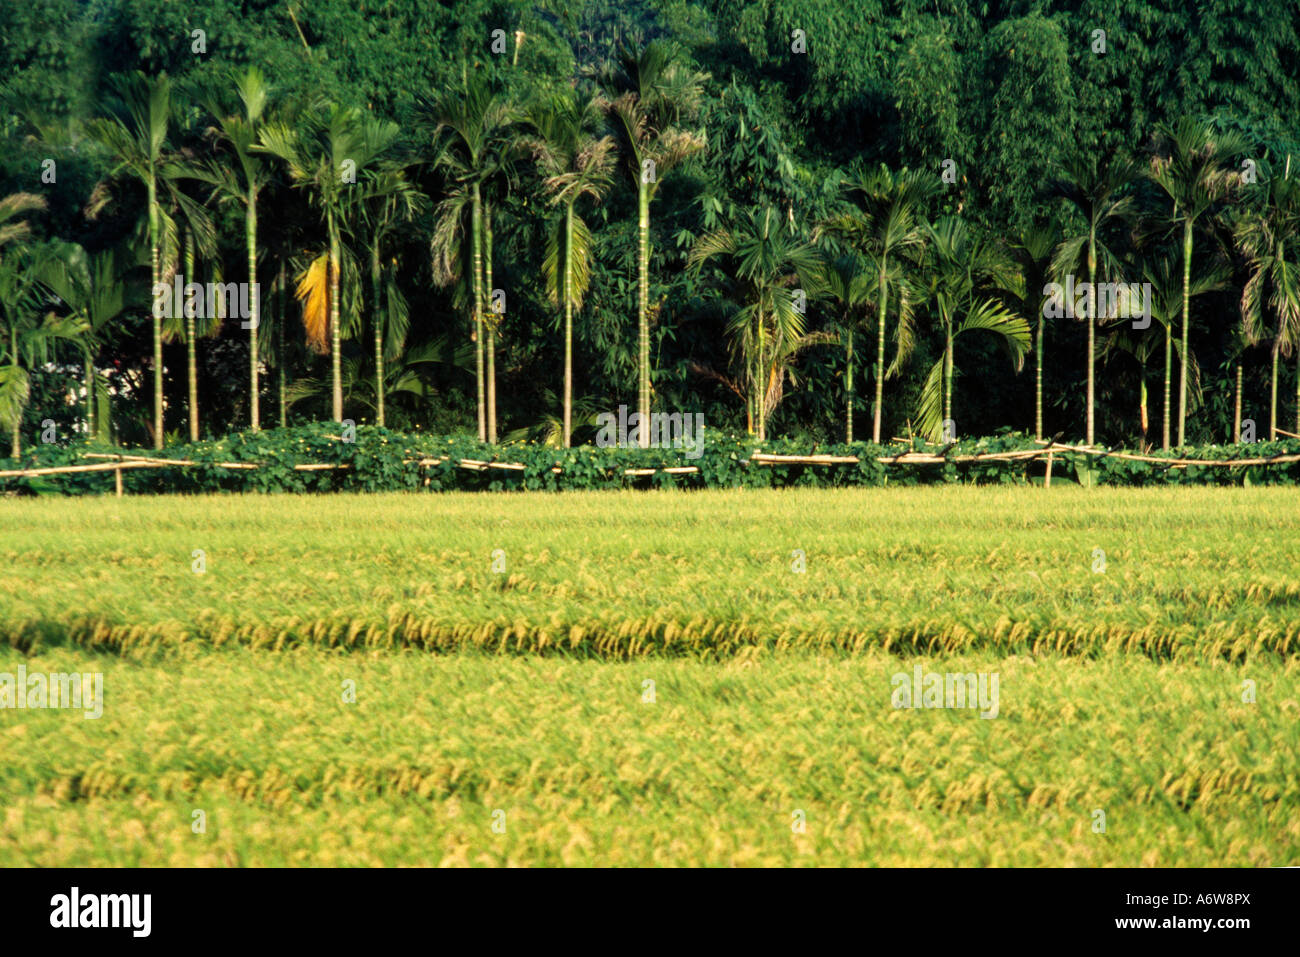 Nr Taichung Taiwan Rice Fields & Birdnut Trees Stock Photo